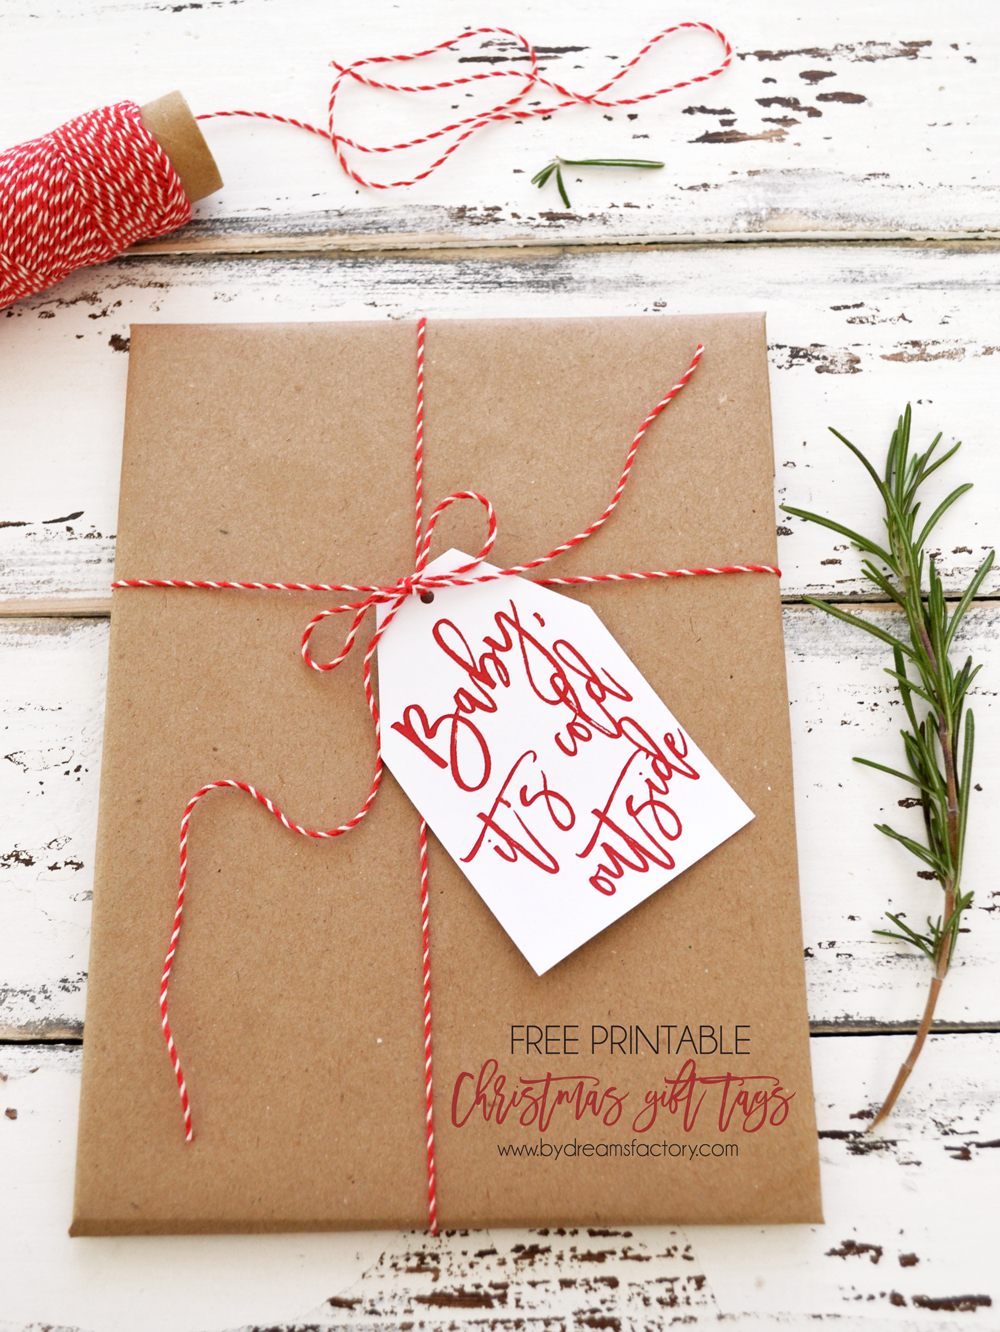 Free printable Christmas gift tags Dreams Factory